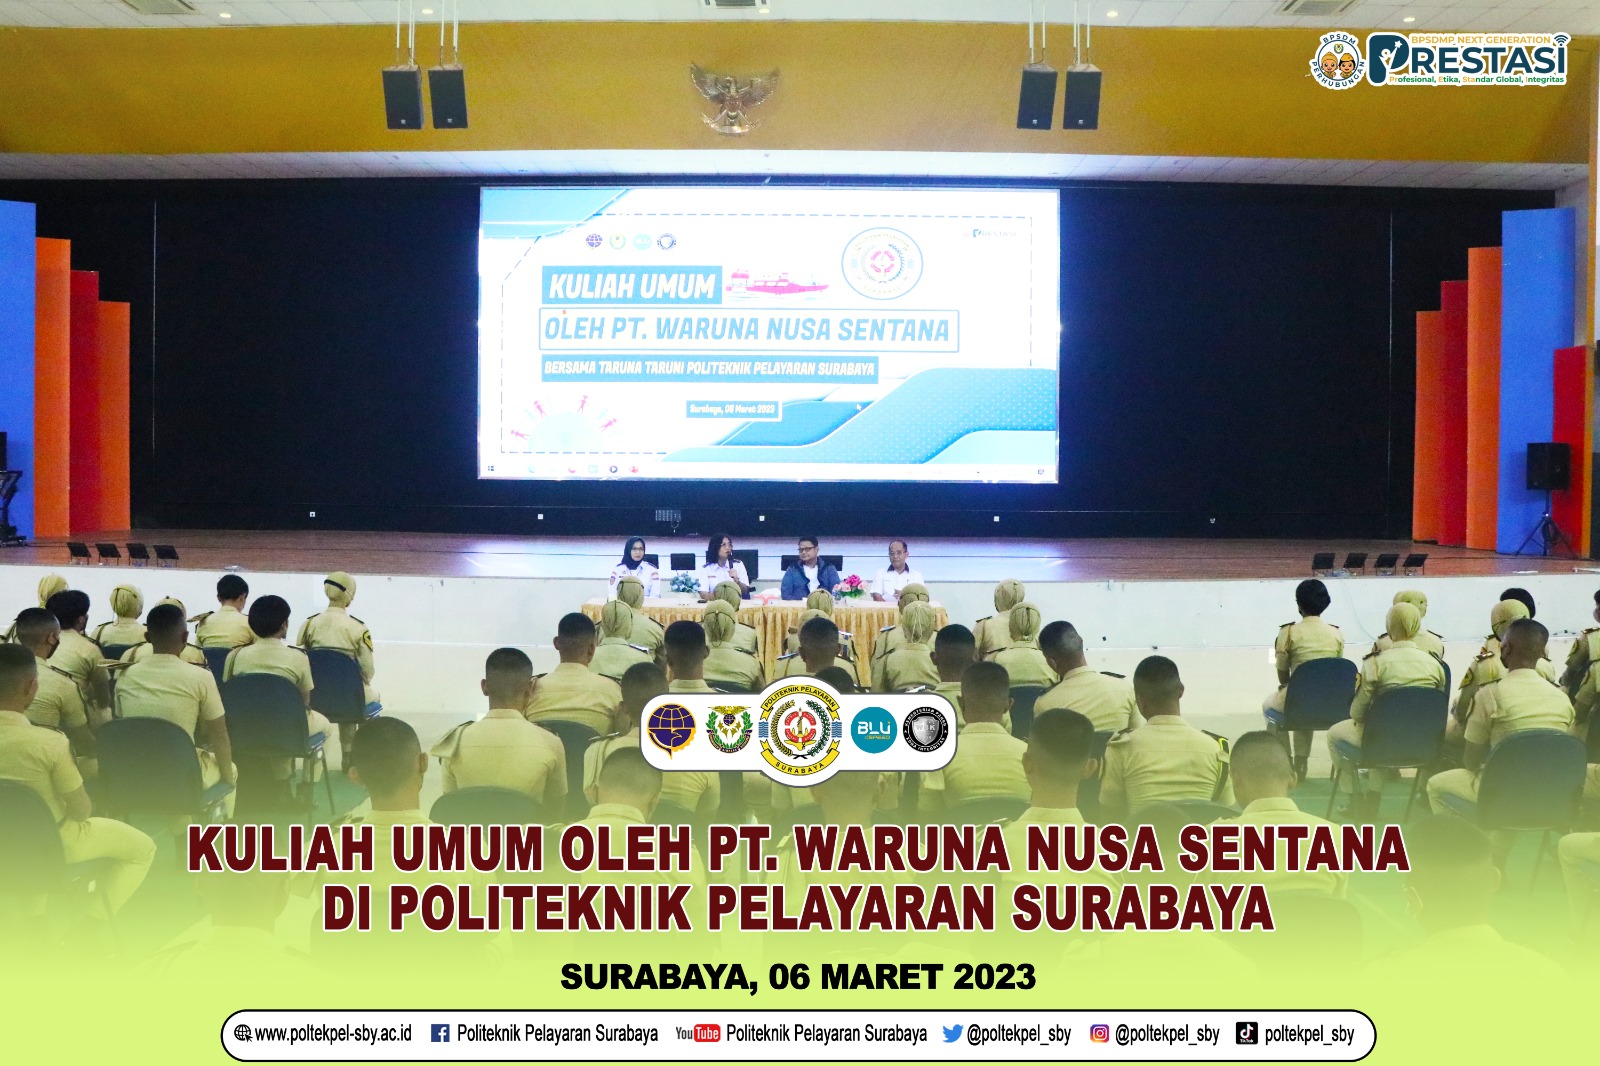 PT. Waruna Nusa Sentana Berikan Kuliah Umum untuk Taruna Poltekpel Surabaya